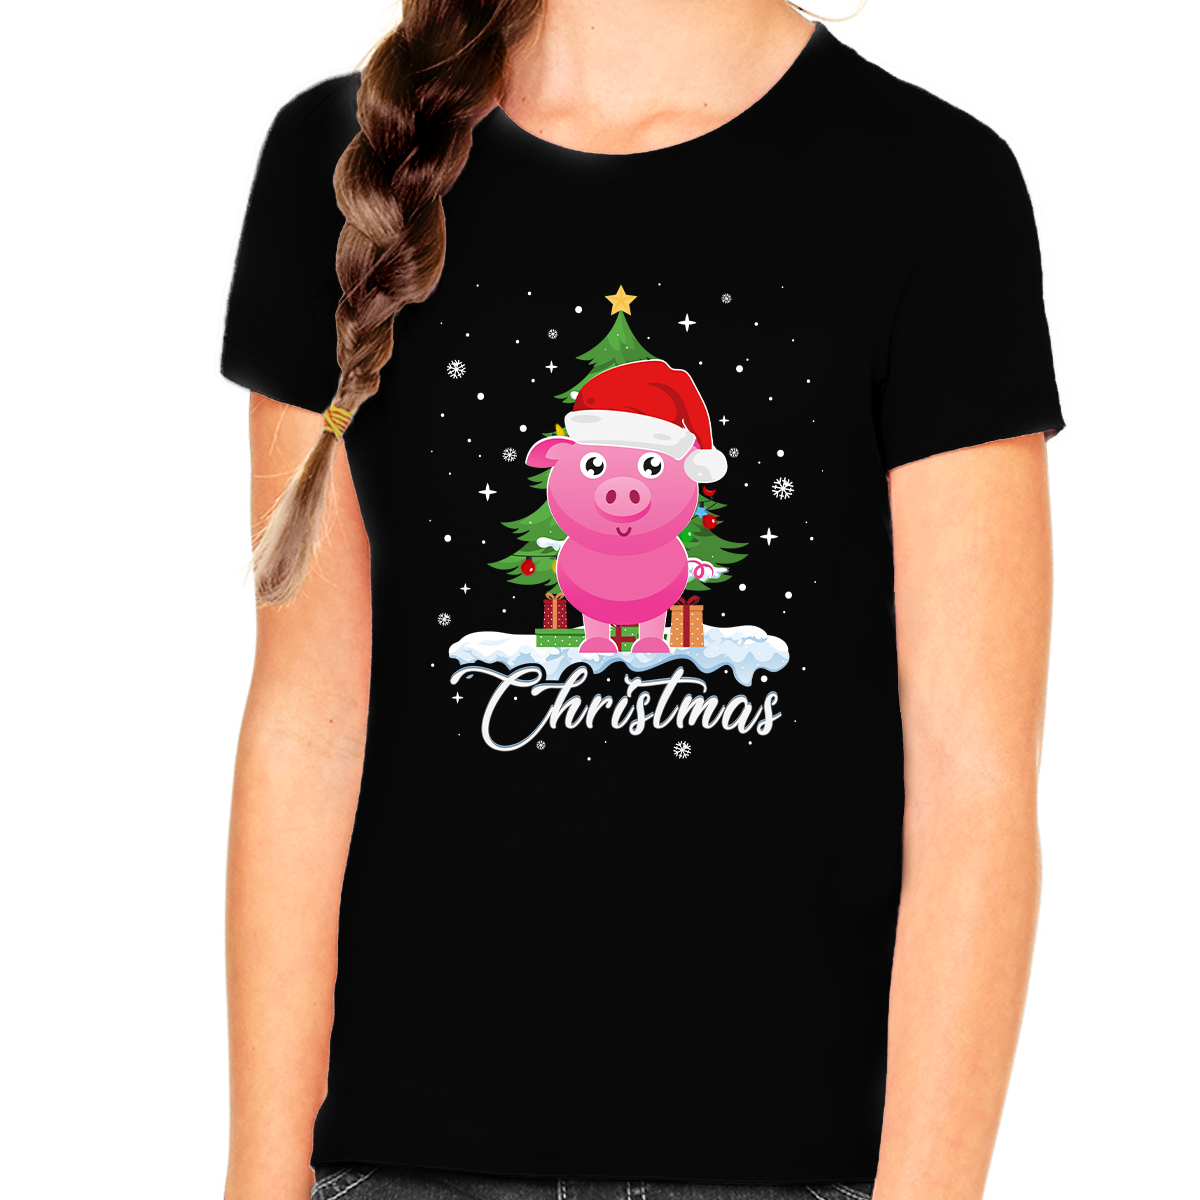 Fire Fit Designs Girls Christmas Shirt Cute Santa Pig Christmas Outfits for Girls Christmas Shirts for Kids